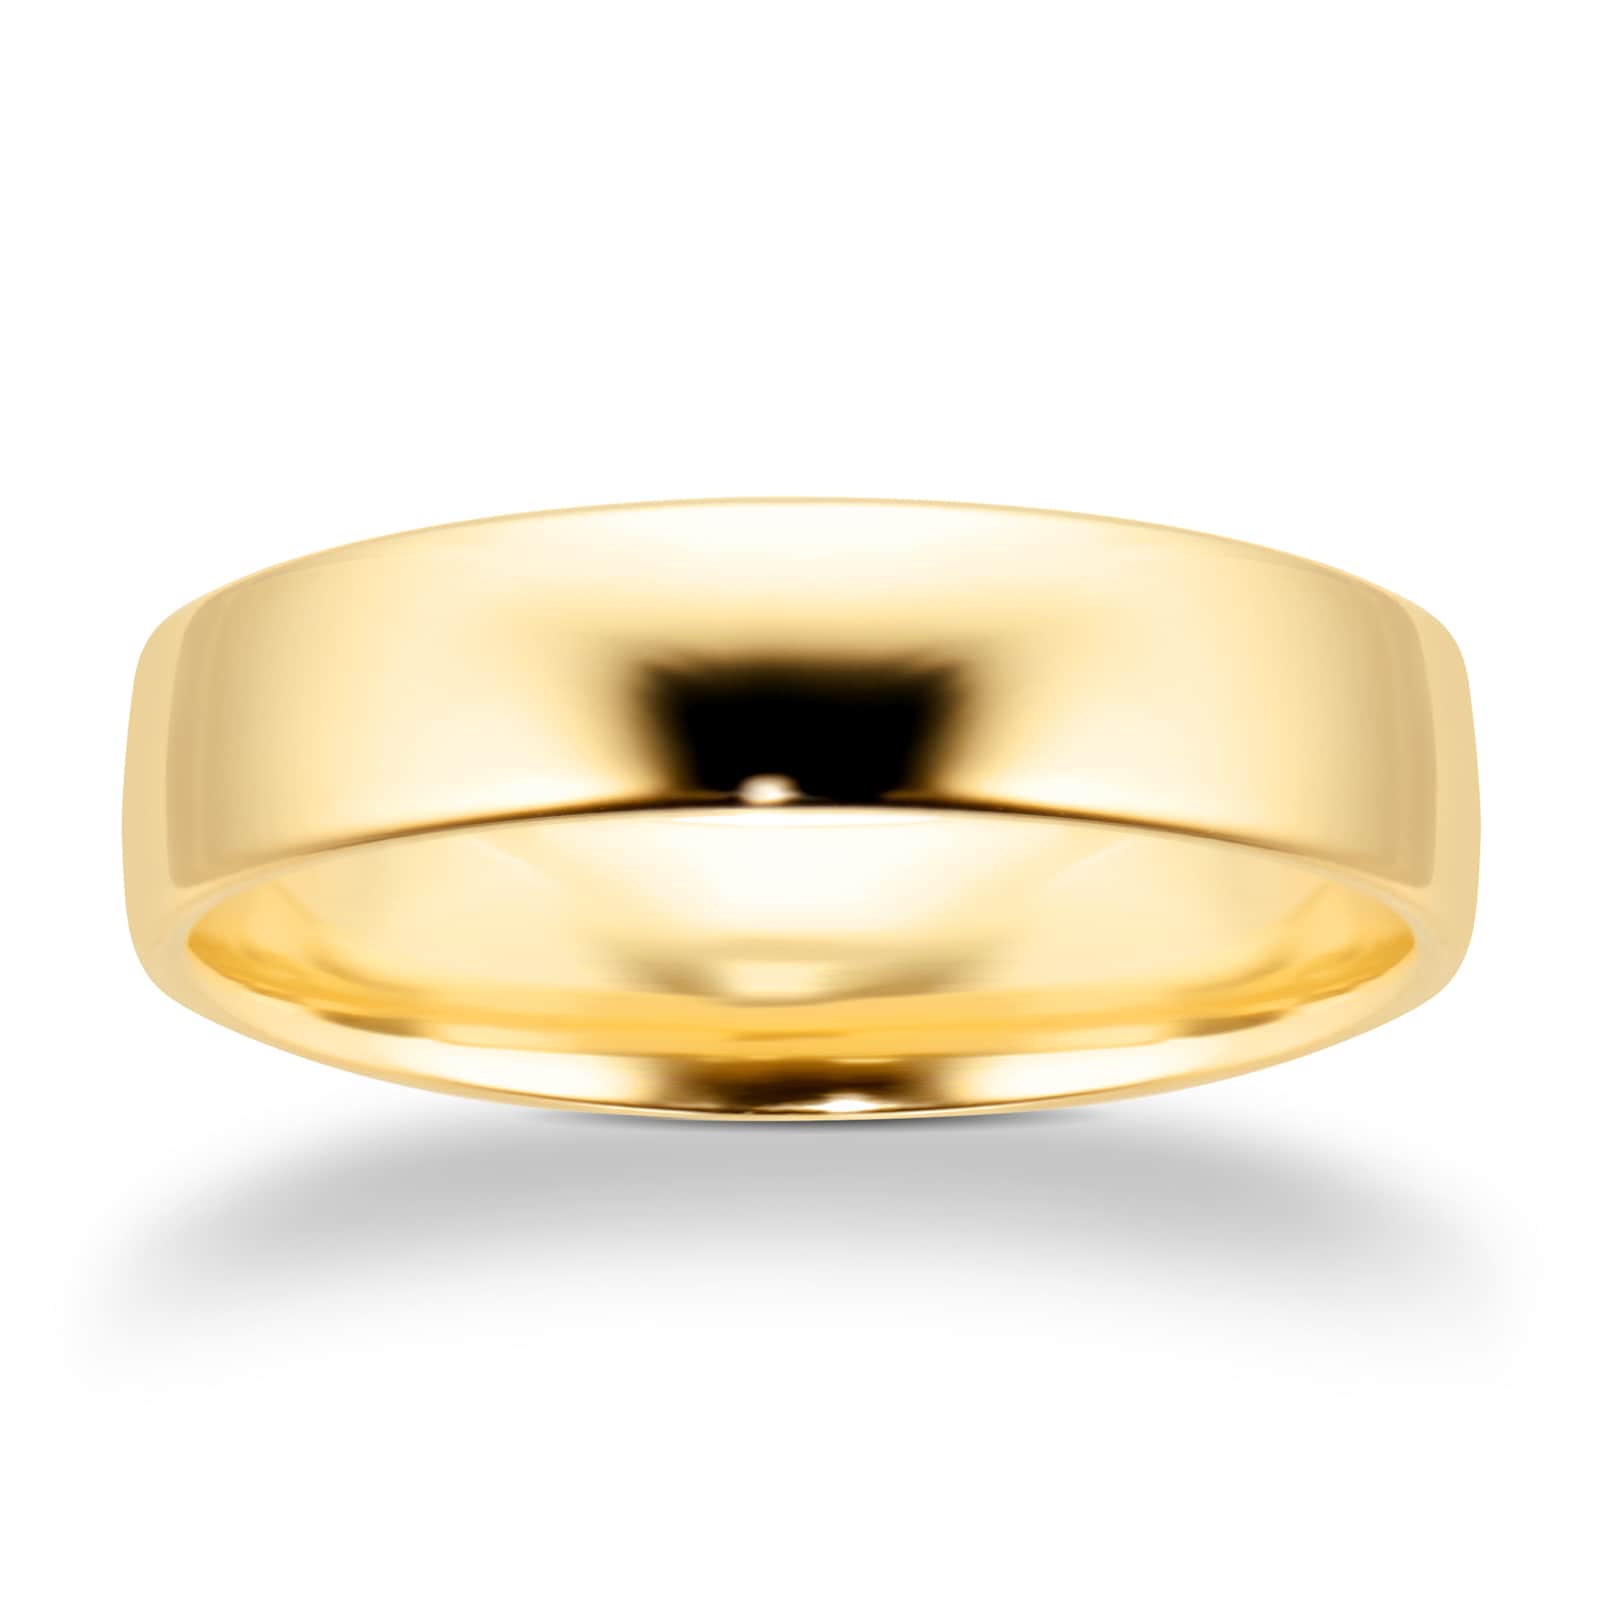 5mm Slight Court Standard Wedding Ring In 18 Carat Yellow Gold - Ring Size K